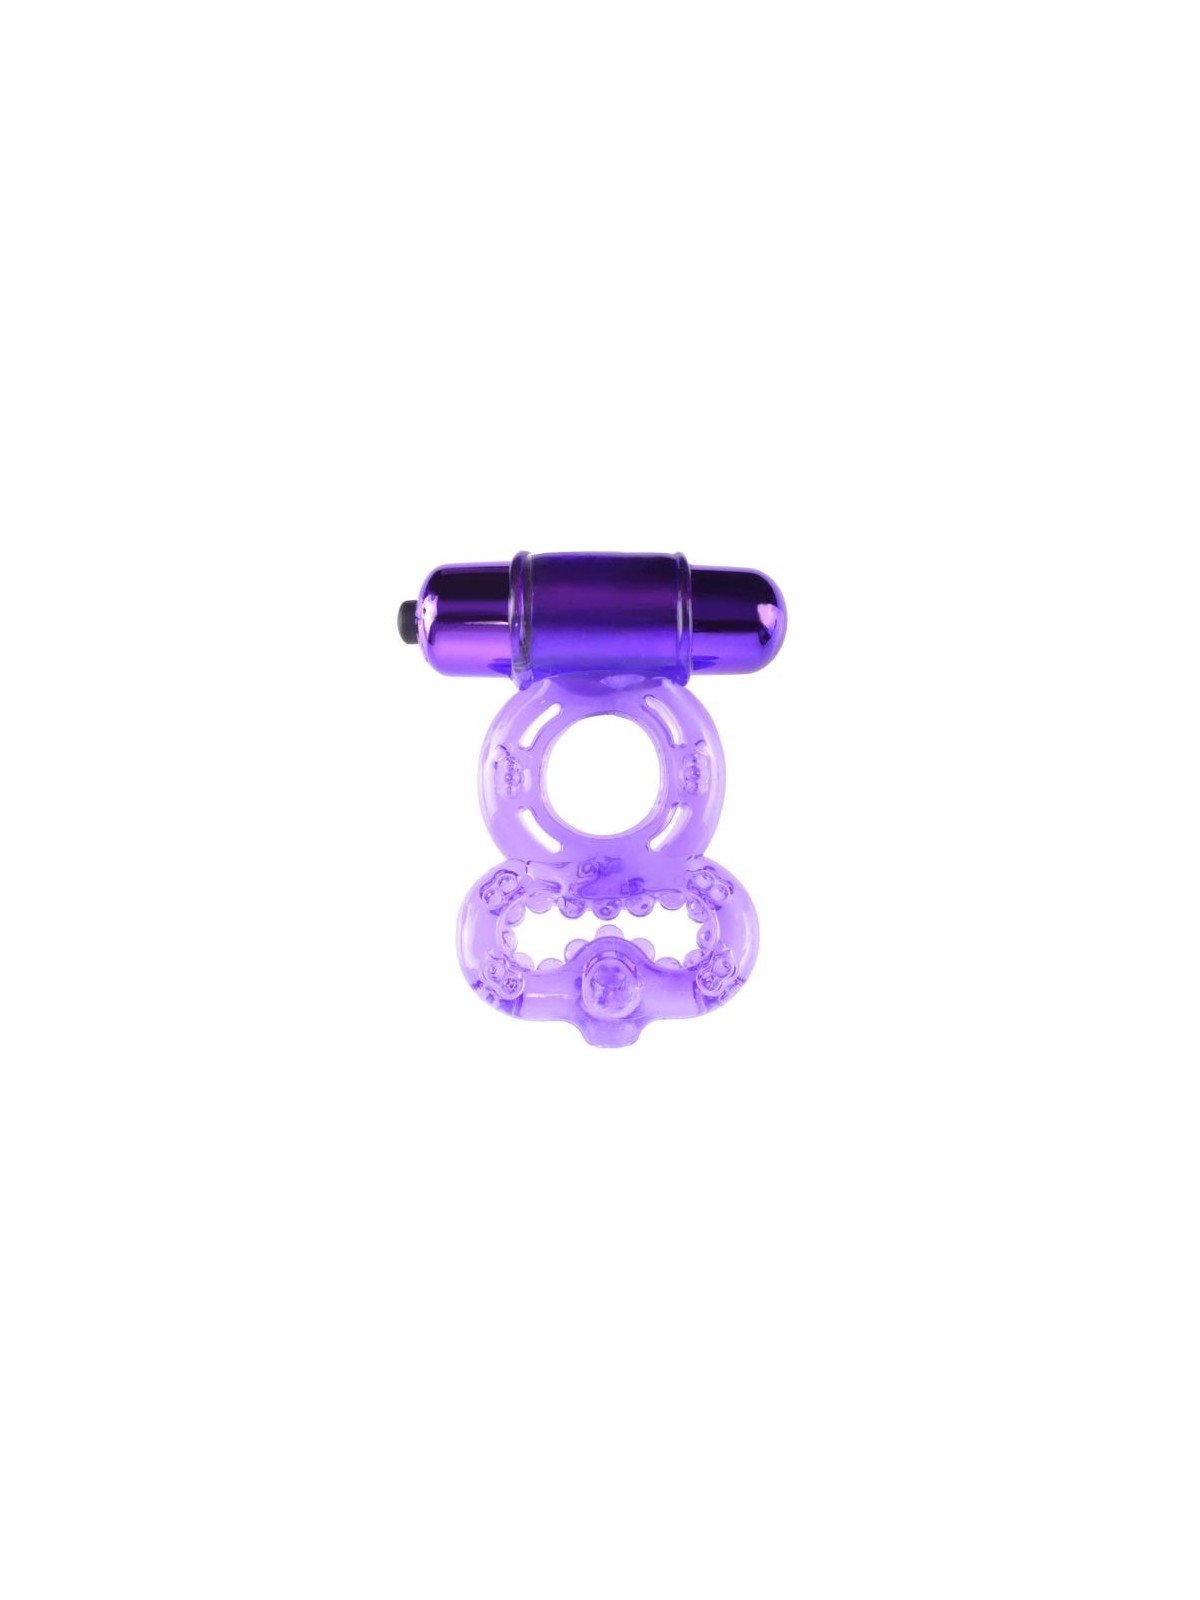 Fantasy C-Ring Infinity Super Ring - Comprar Anillo vibrador pene Fantasy C-Ringz - Anillos vibradores pene (4)